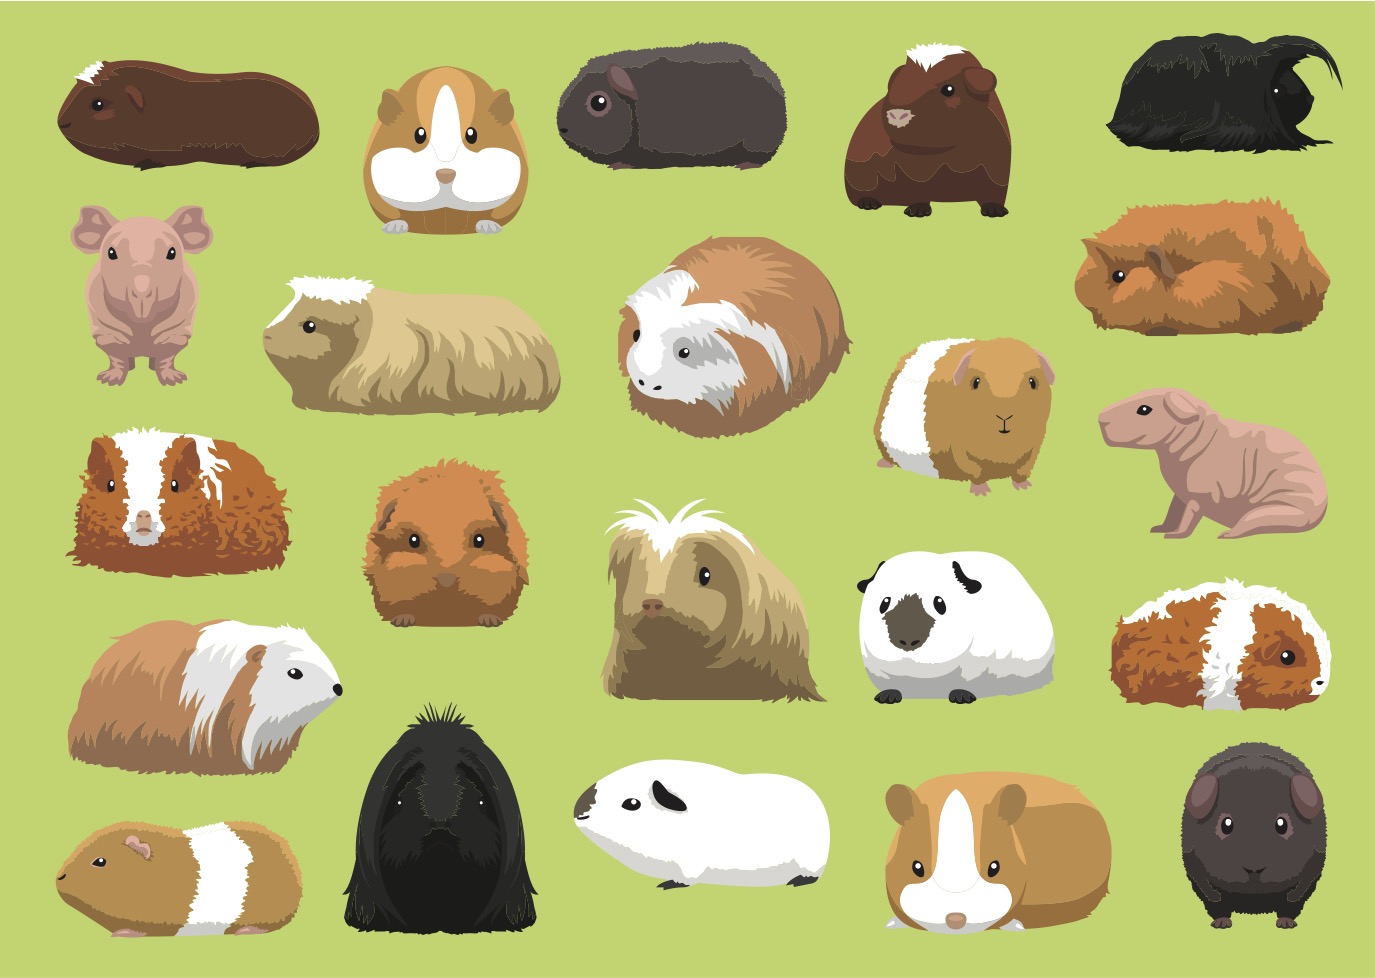 Drawings of various guinea pig breeds